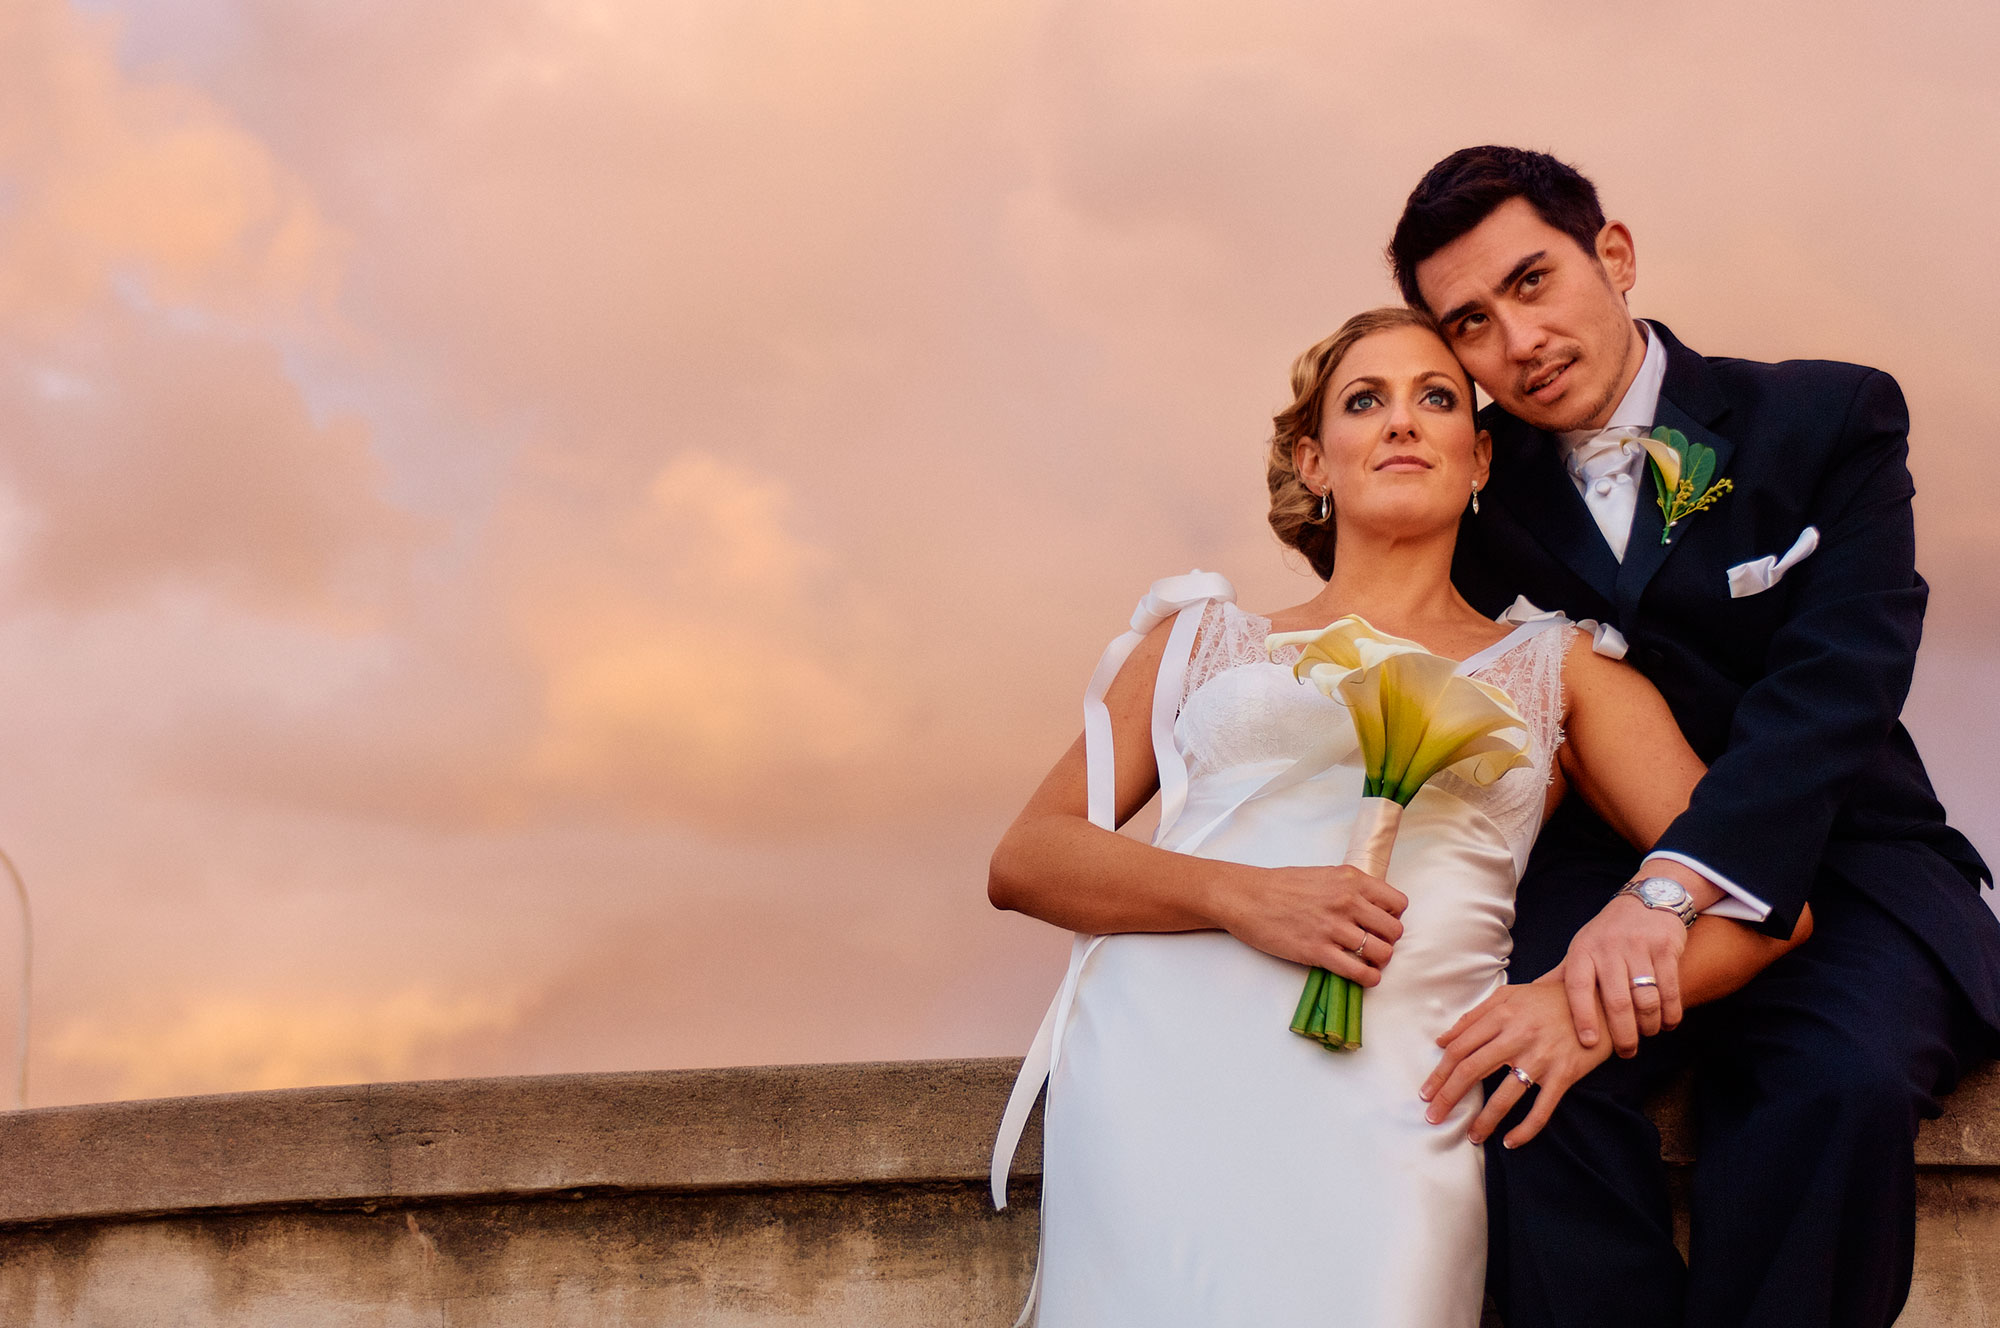 Sunset wedding photos in Bondi